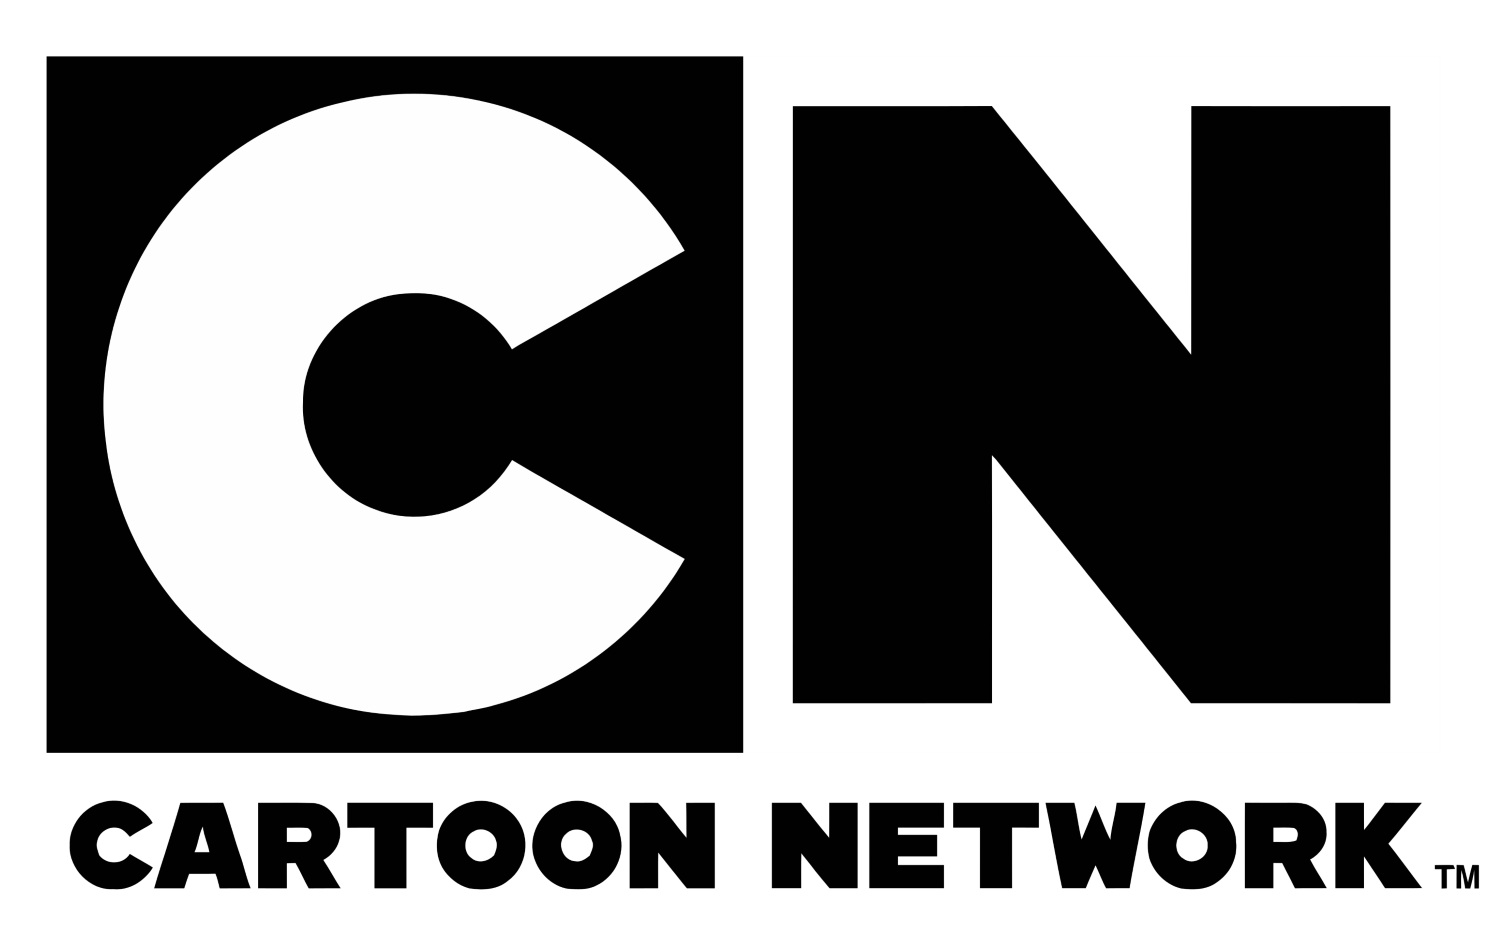 CN, Cartoon Network logo, logotype